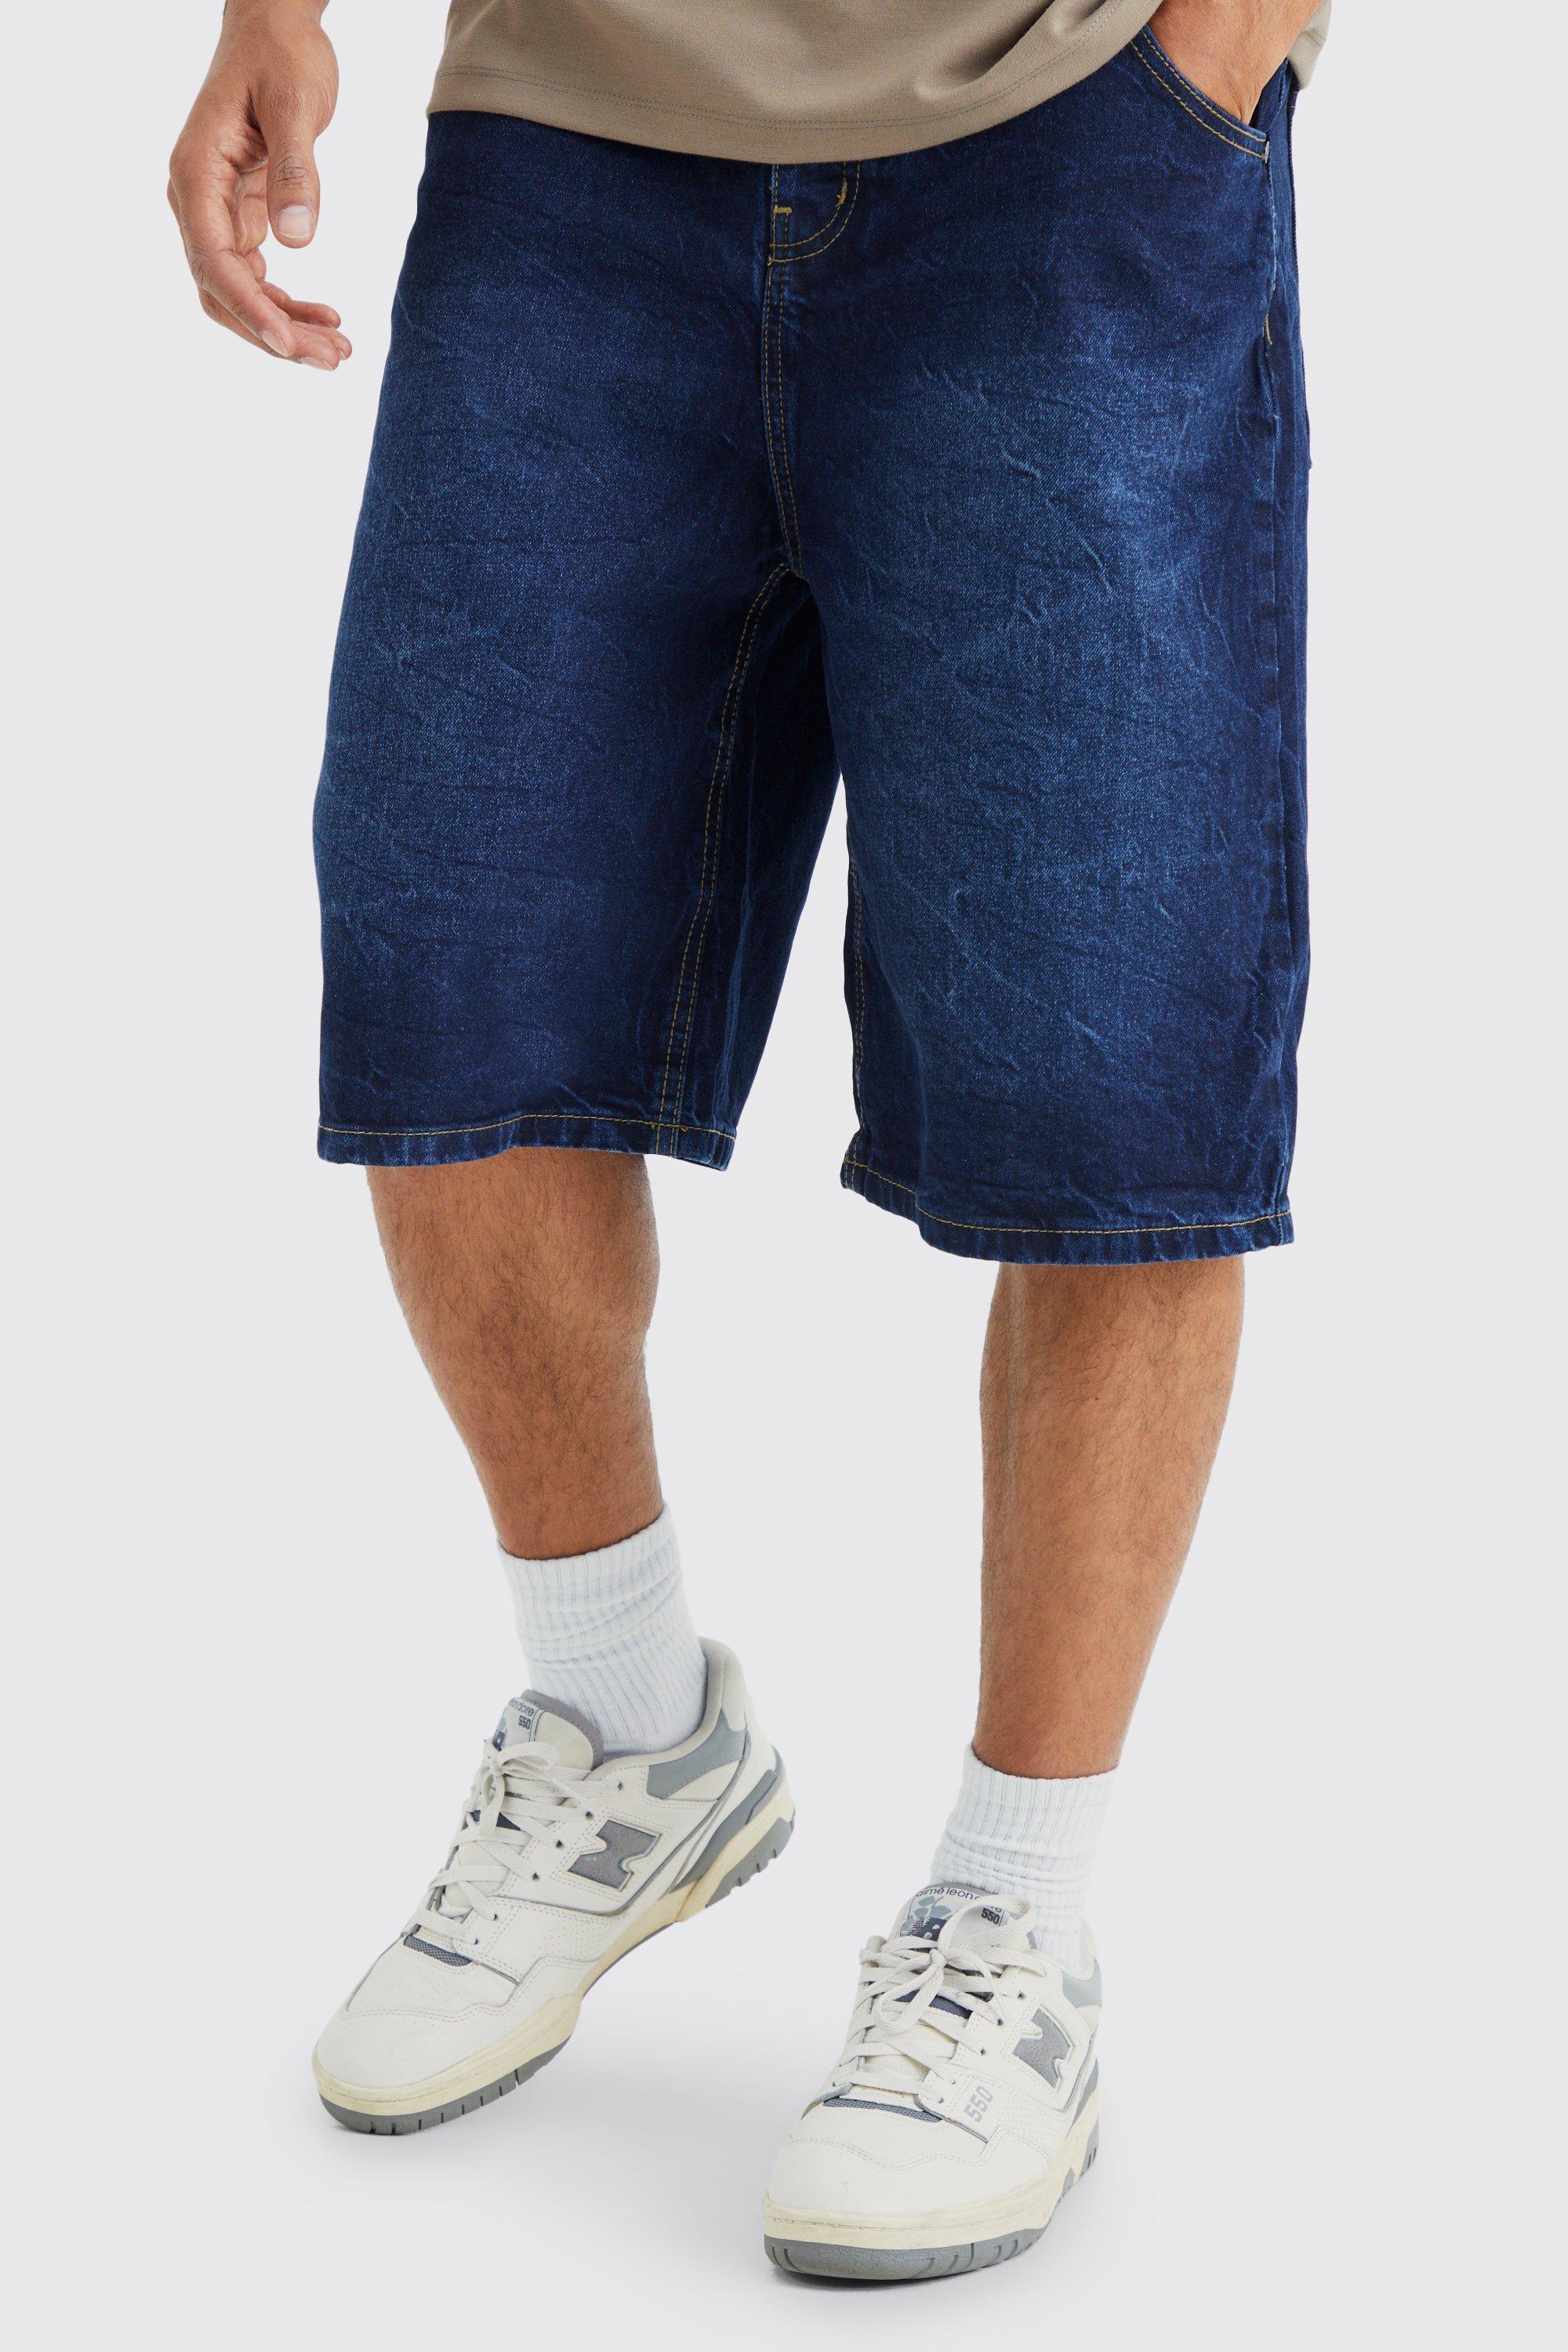 boohooMAN Mens Relaxed Fit Rigid Multi Rip Jean Shorts - Blue